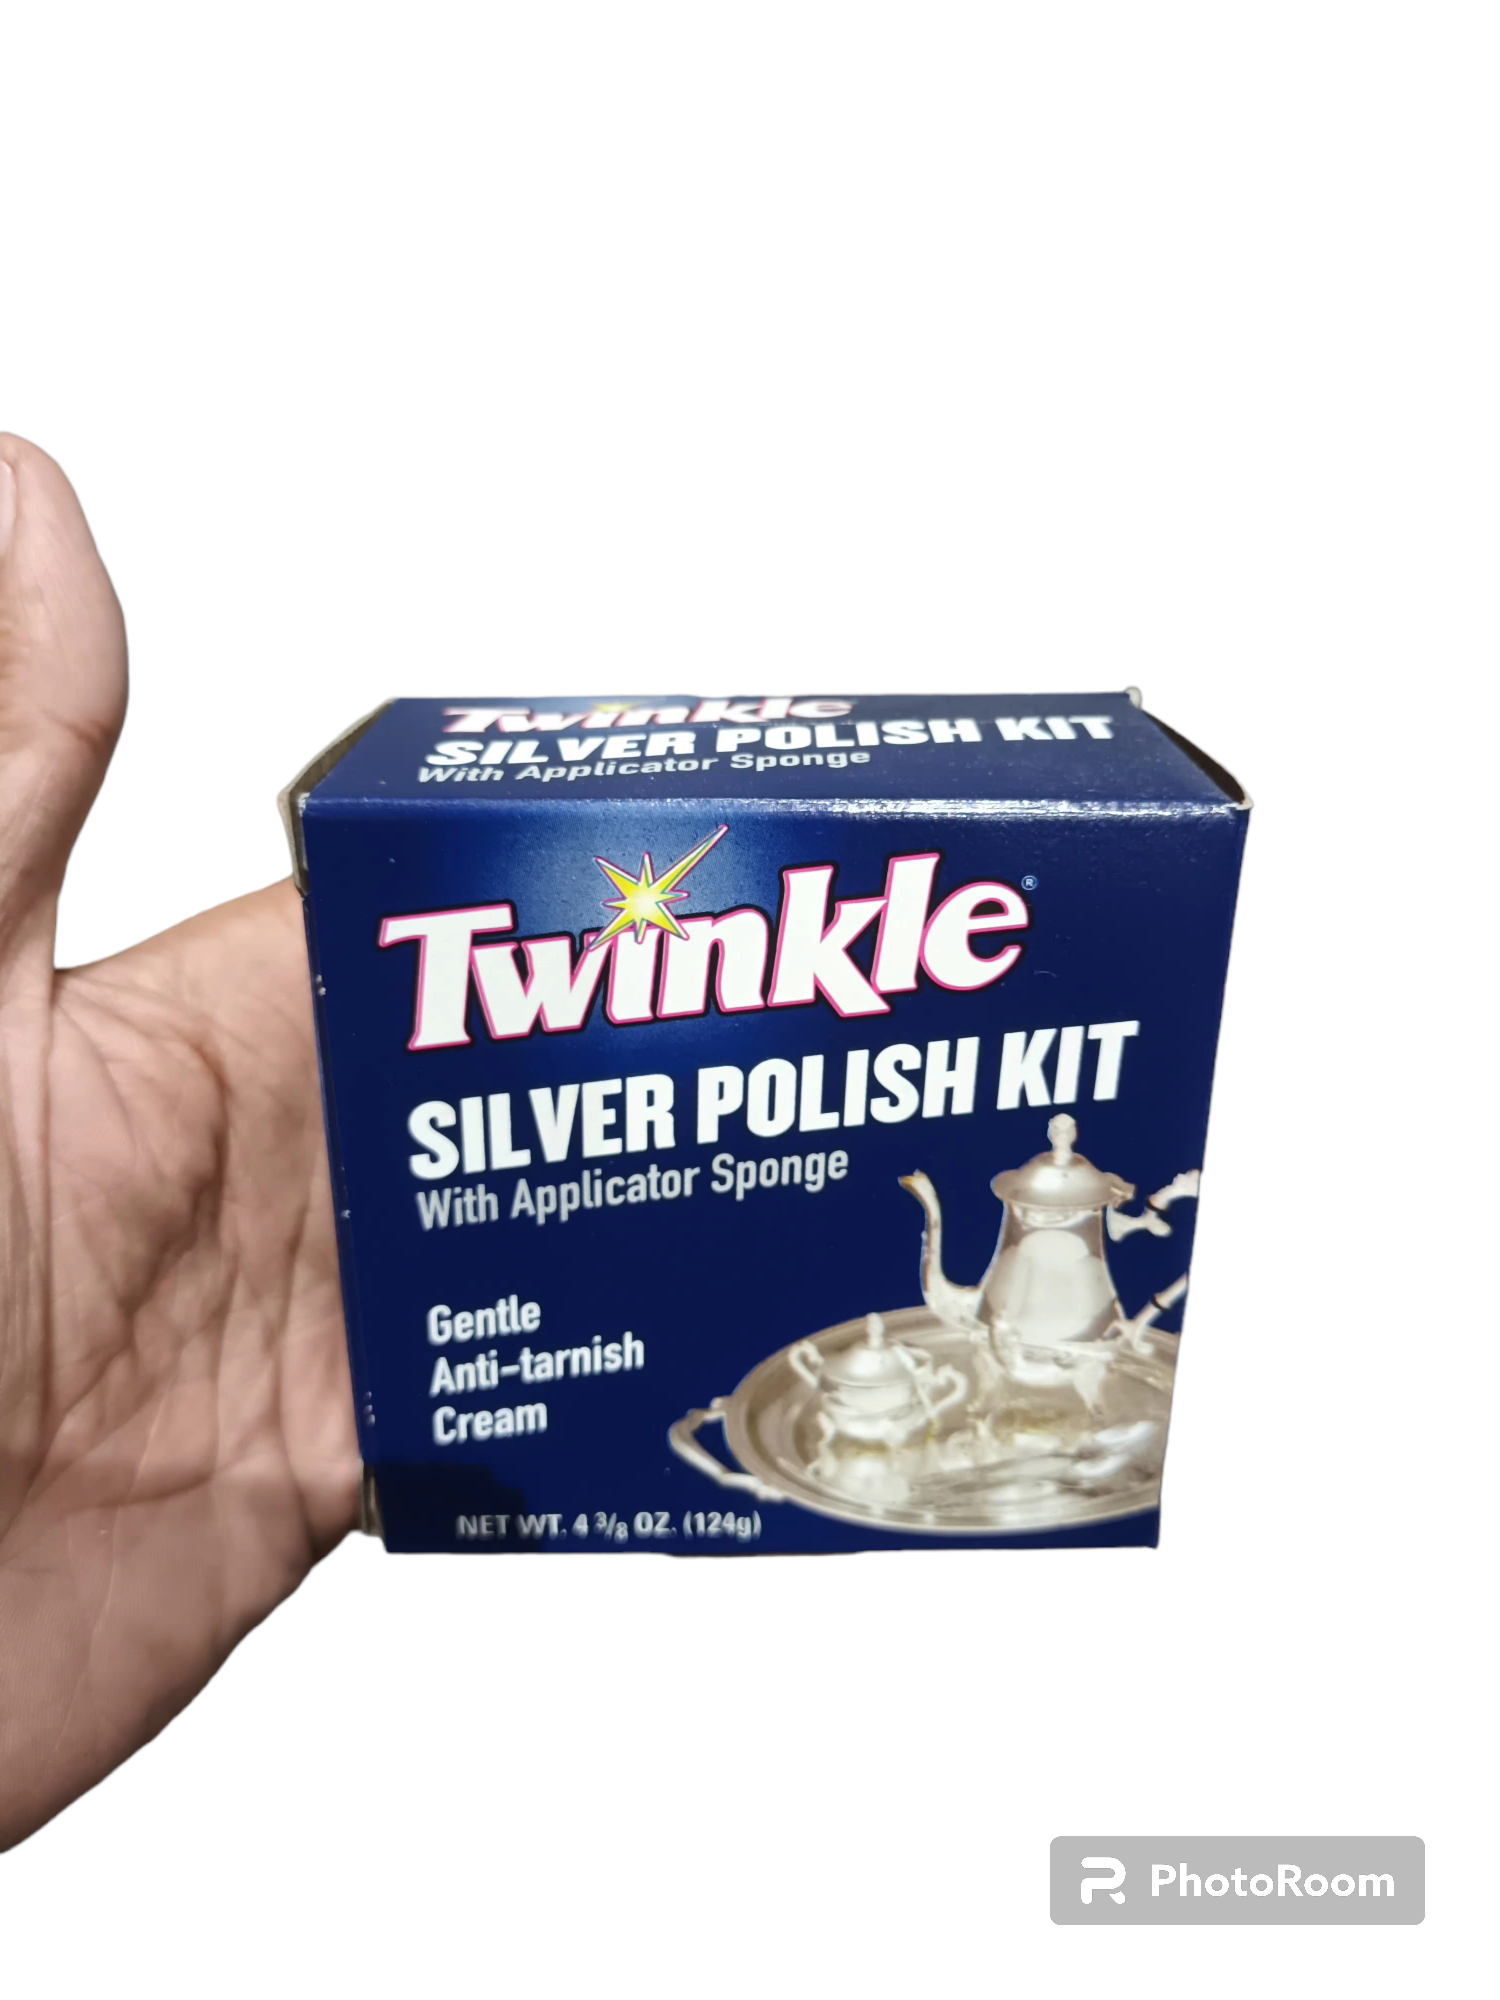 Twinkle Silver Polish Kit With Applicator Sponge, Gentle Anti Tarnish Cream